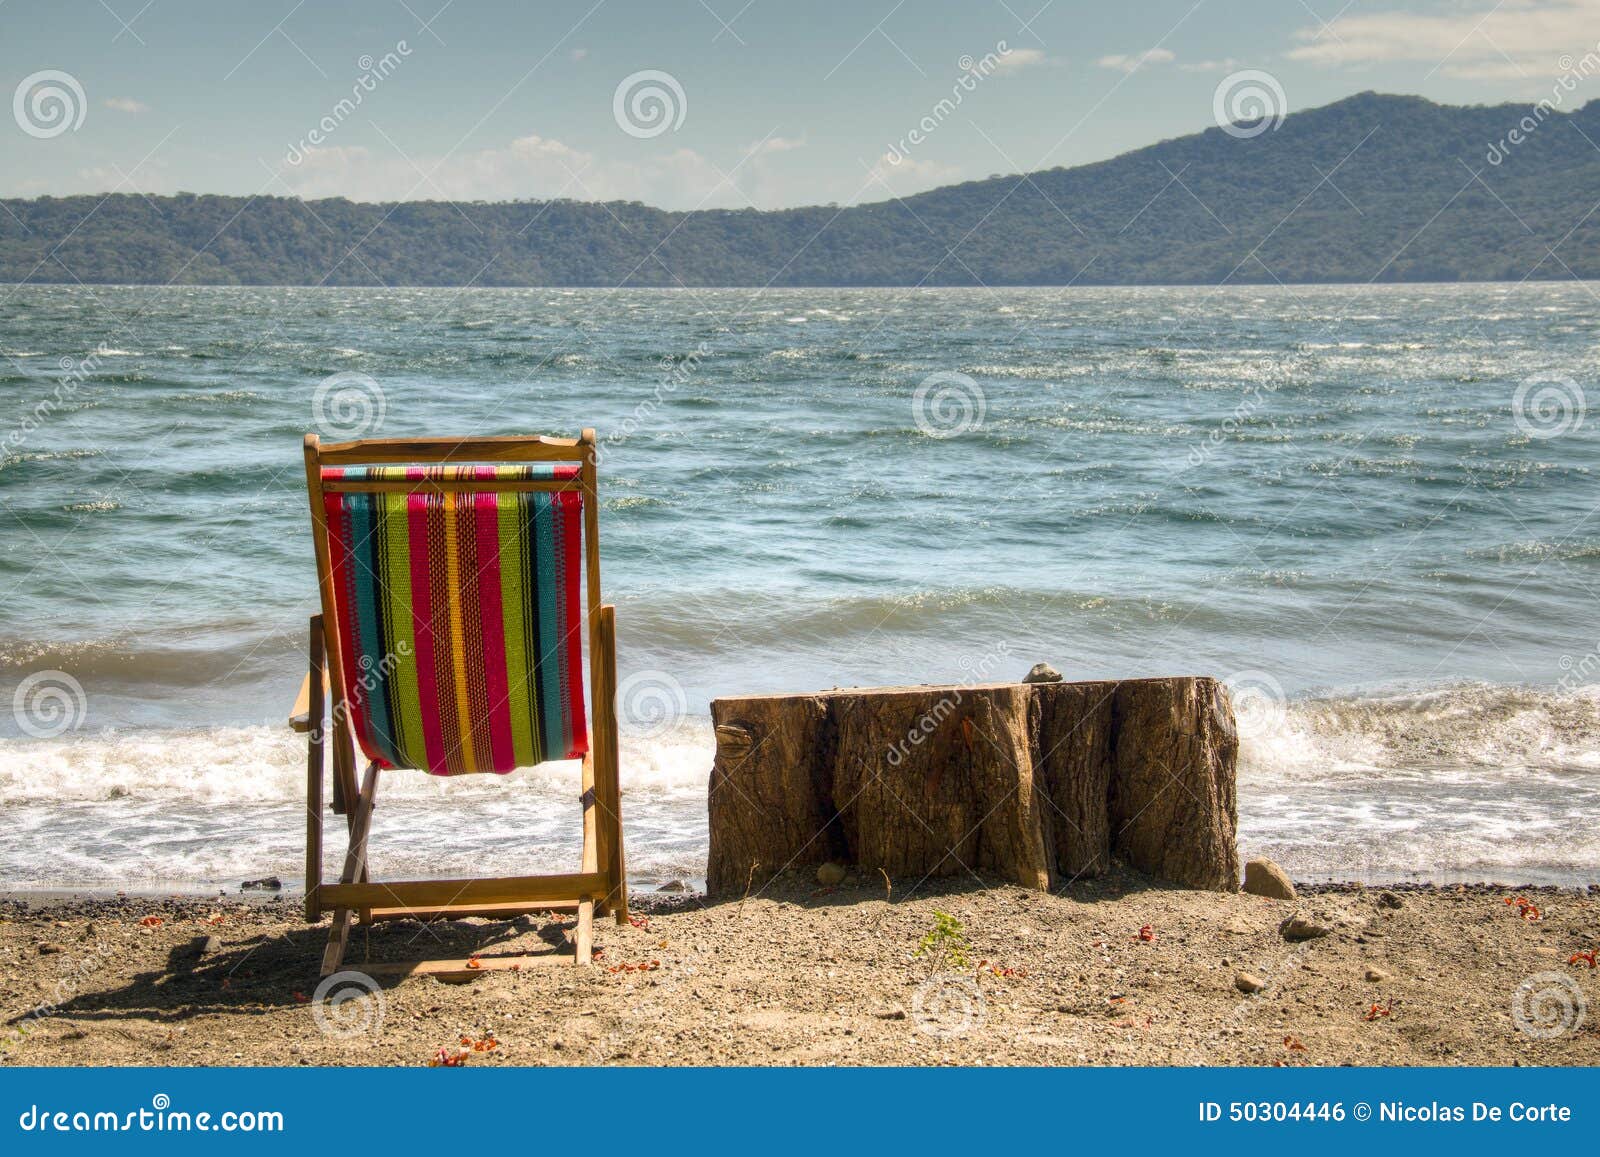 chair at the shore of lake apoyo near granada, nicaragua